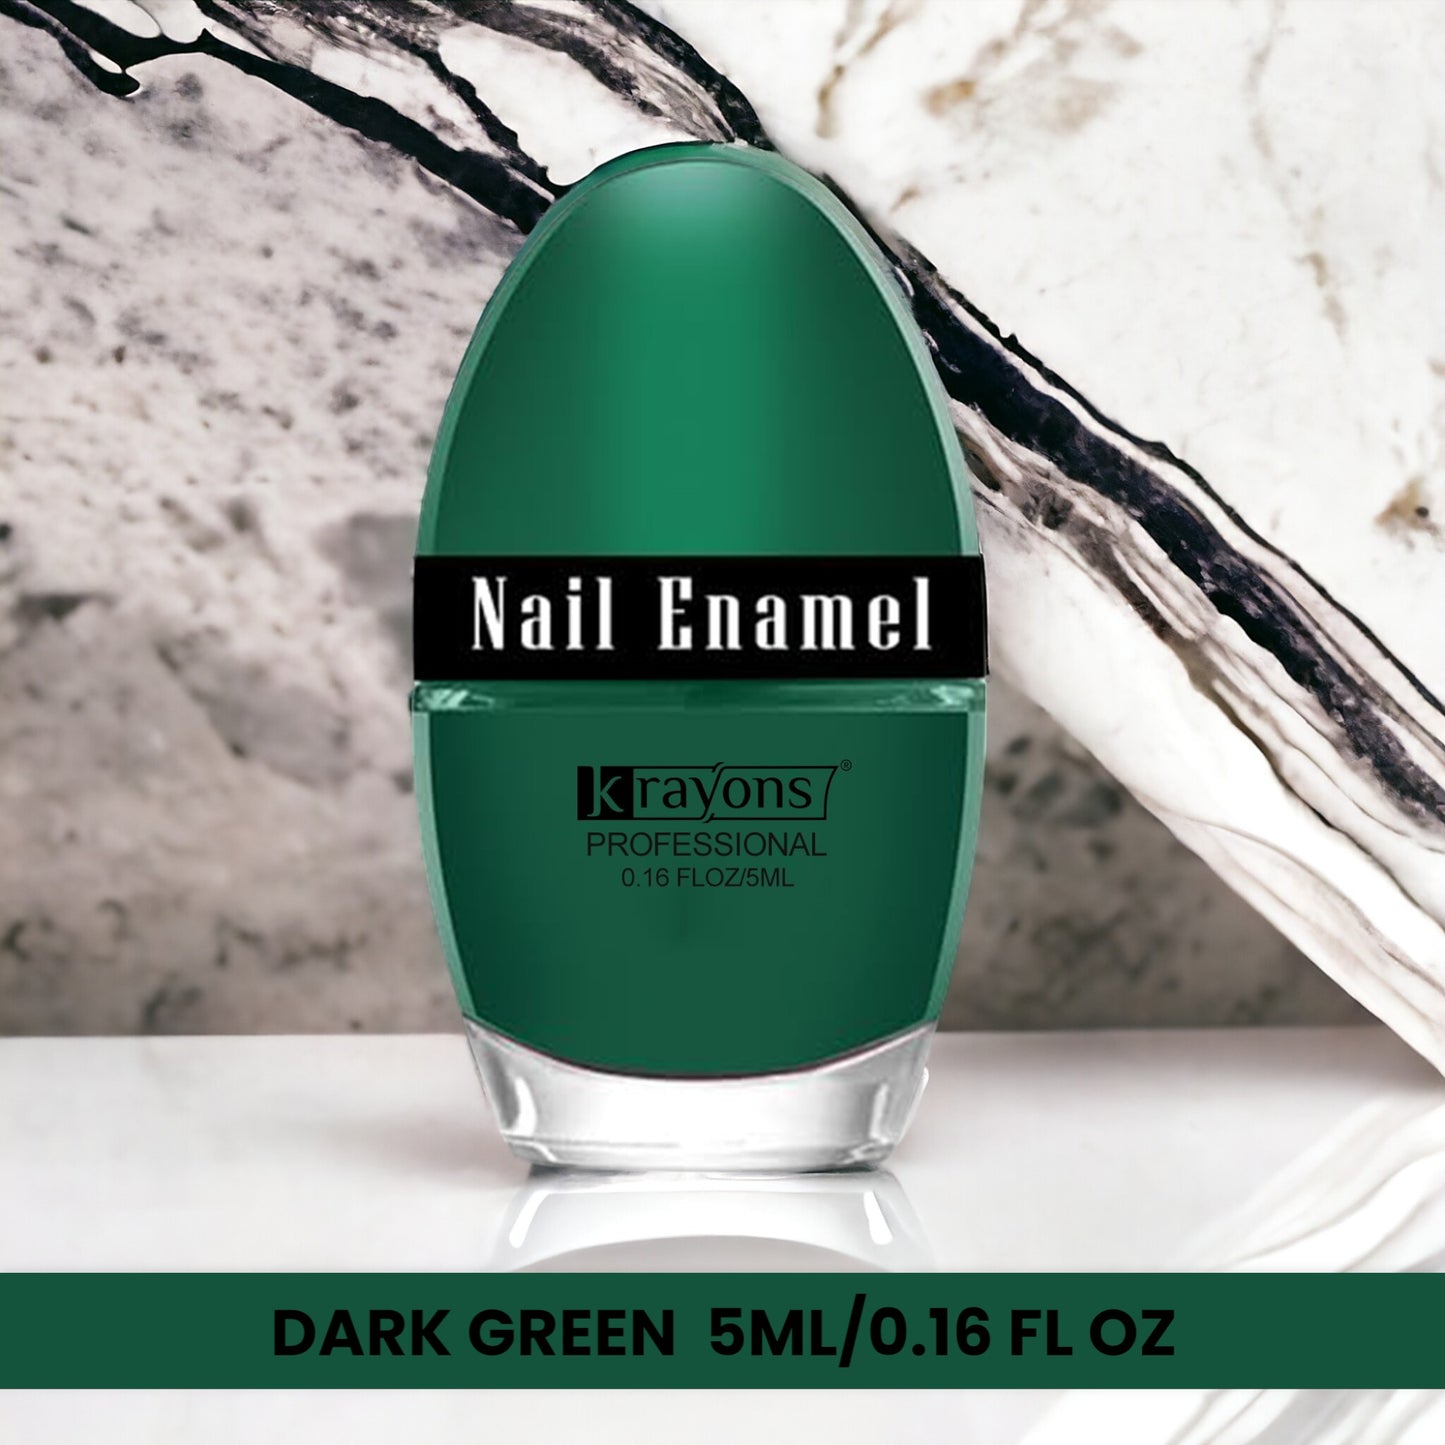 Krayons Professional Glossy Nail Paint, Dark Green, 5ml